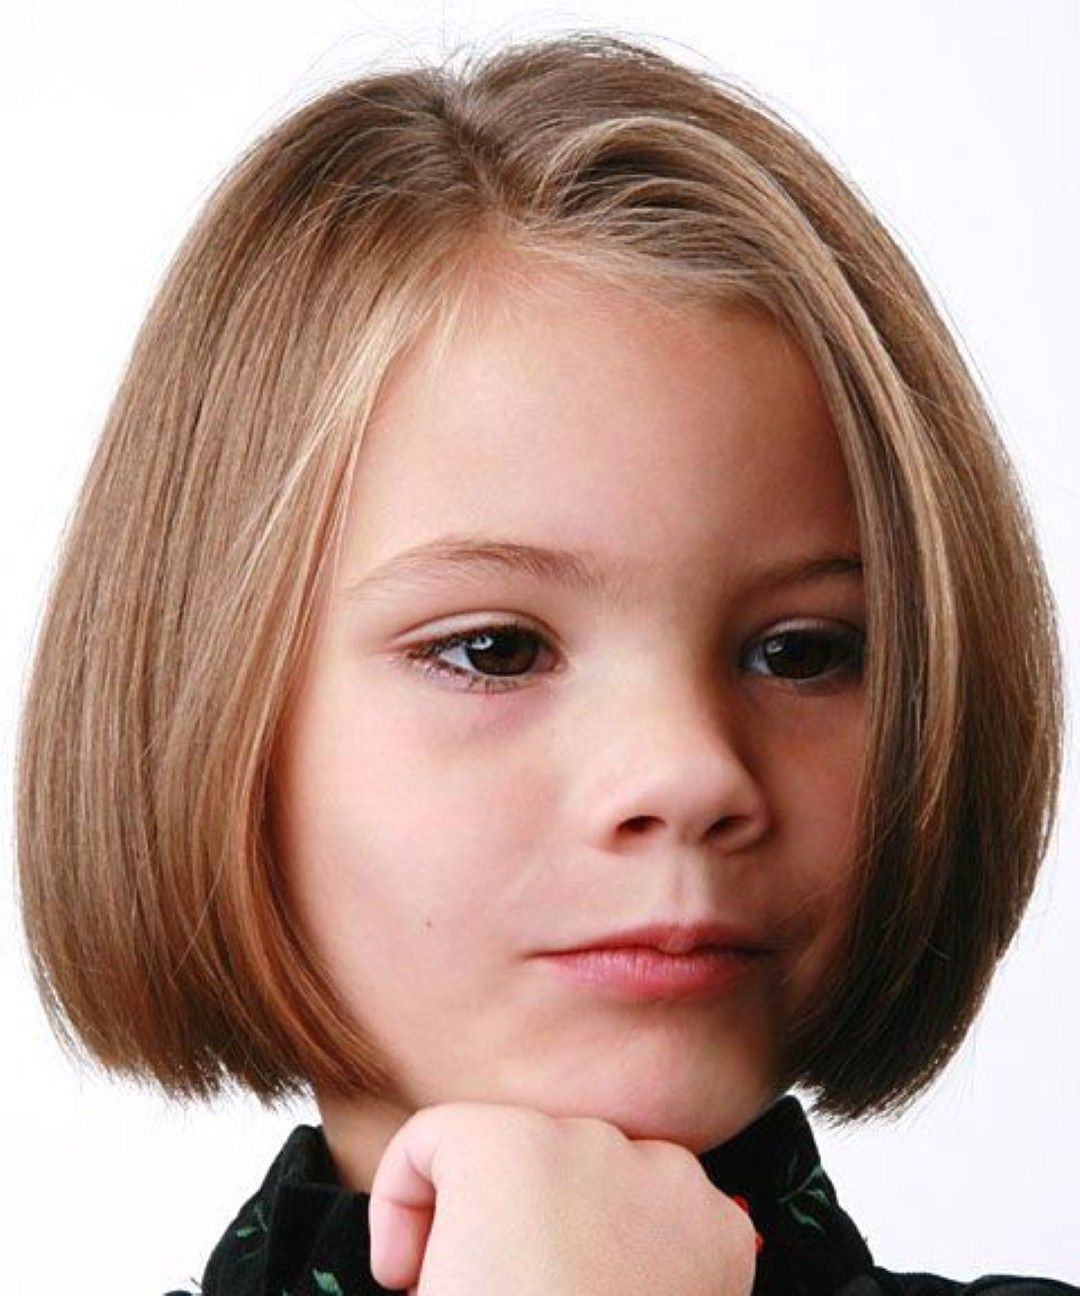 Lil Kids Haircuts
 Short Haircuts For Kids Girls